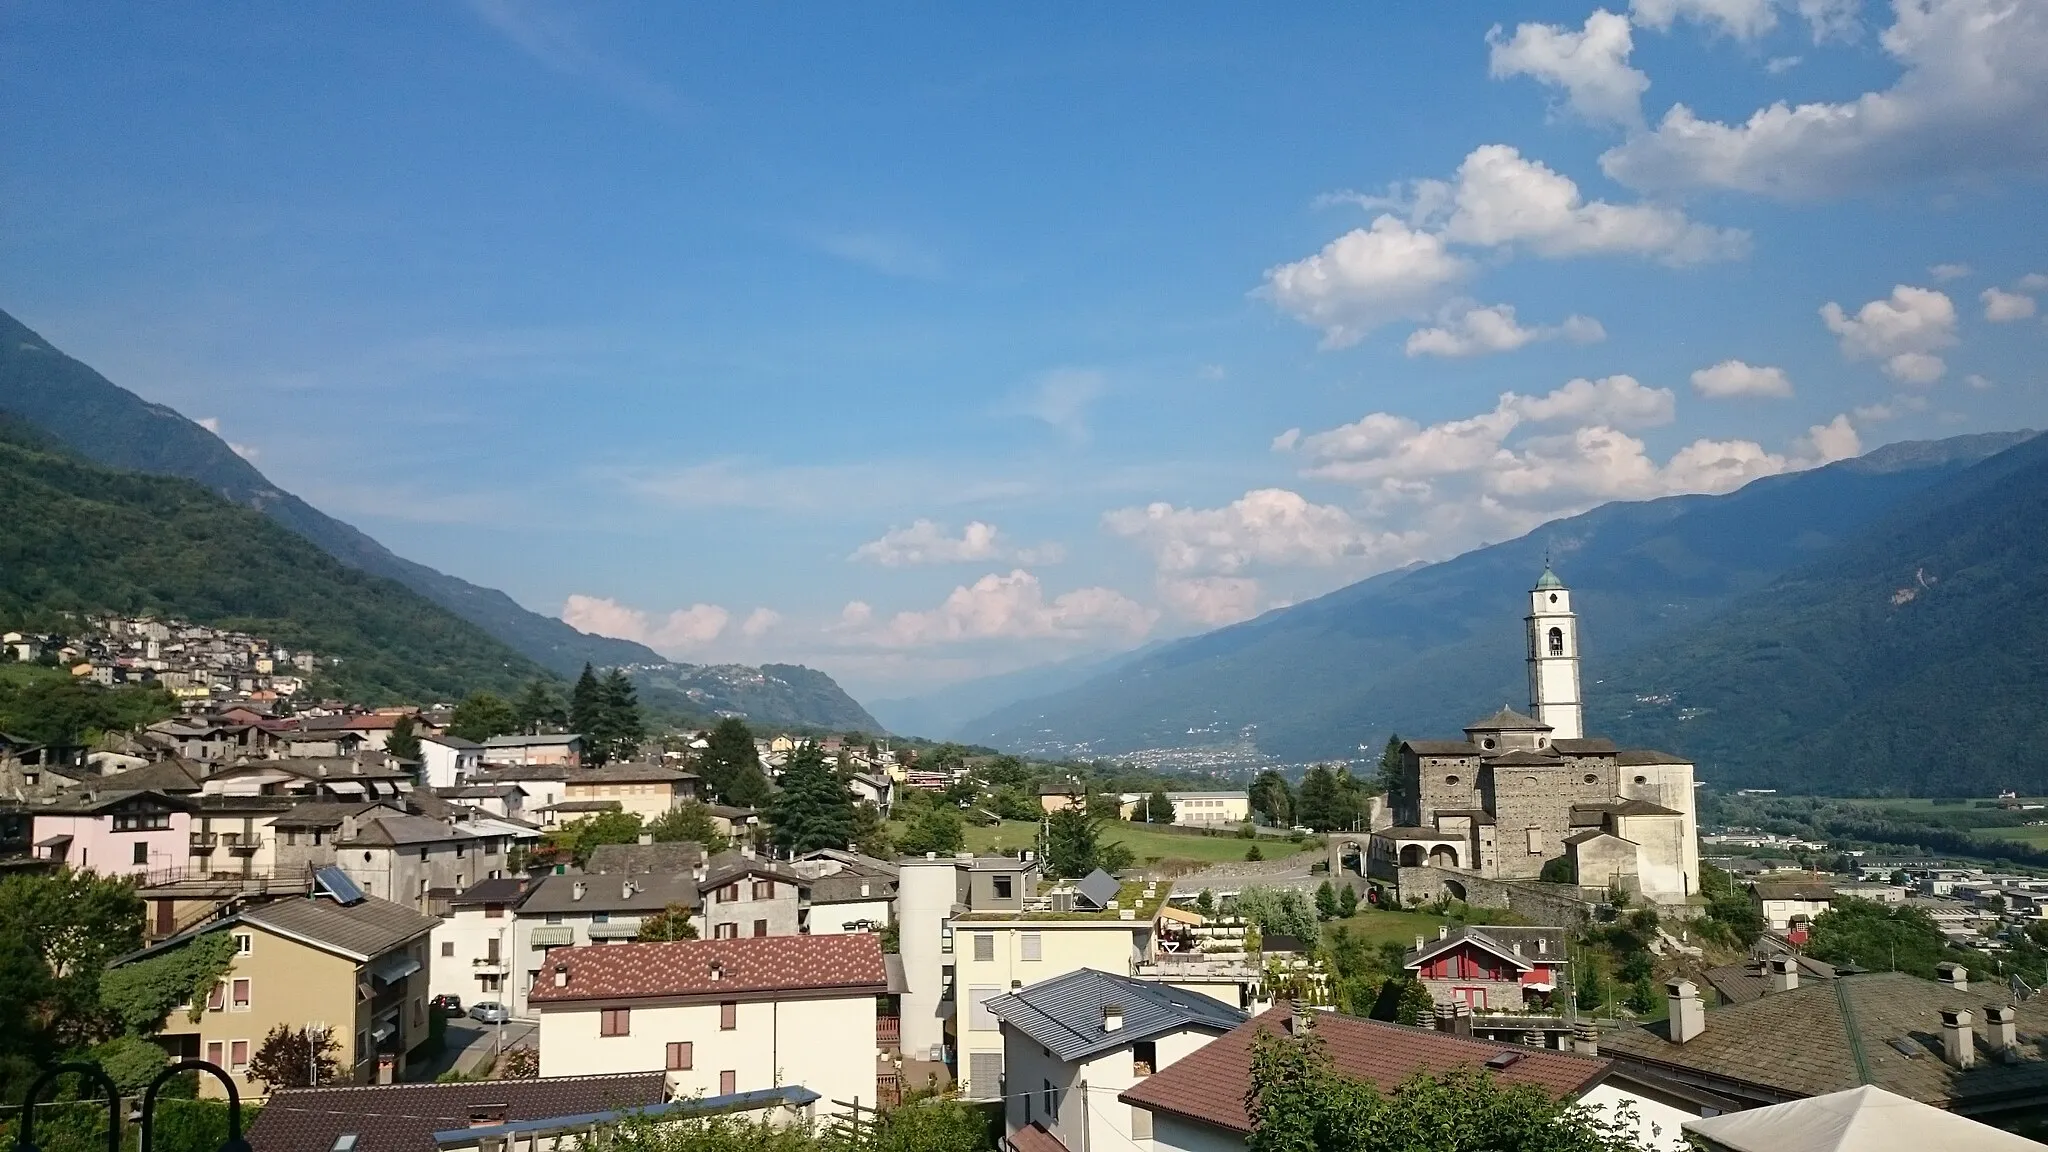 Bild von Berbenno di Valtellina